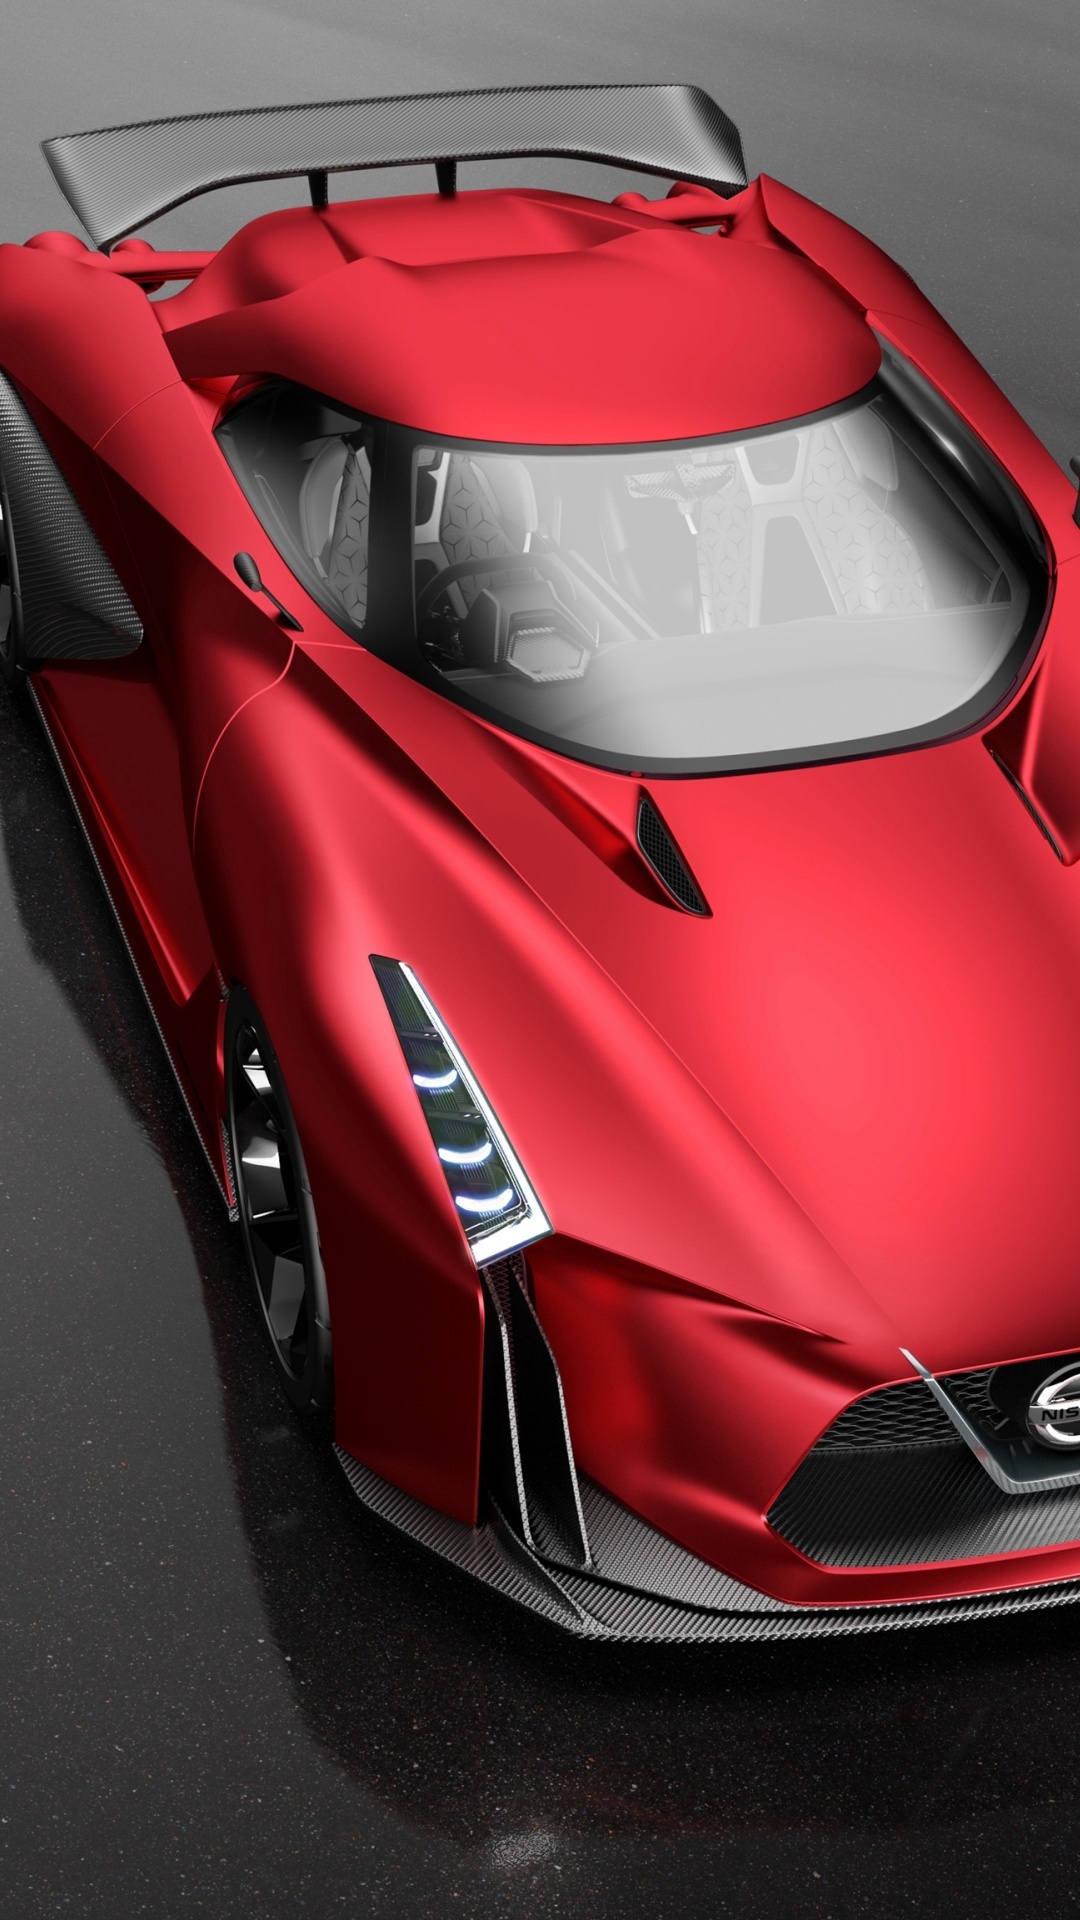 Nissan Concept 2020 Vision Gran Turismo 2015